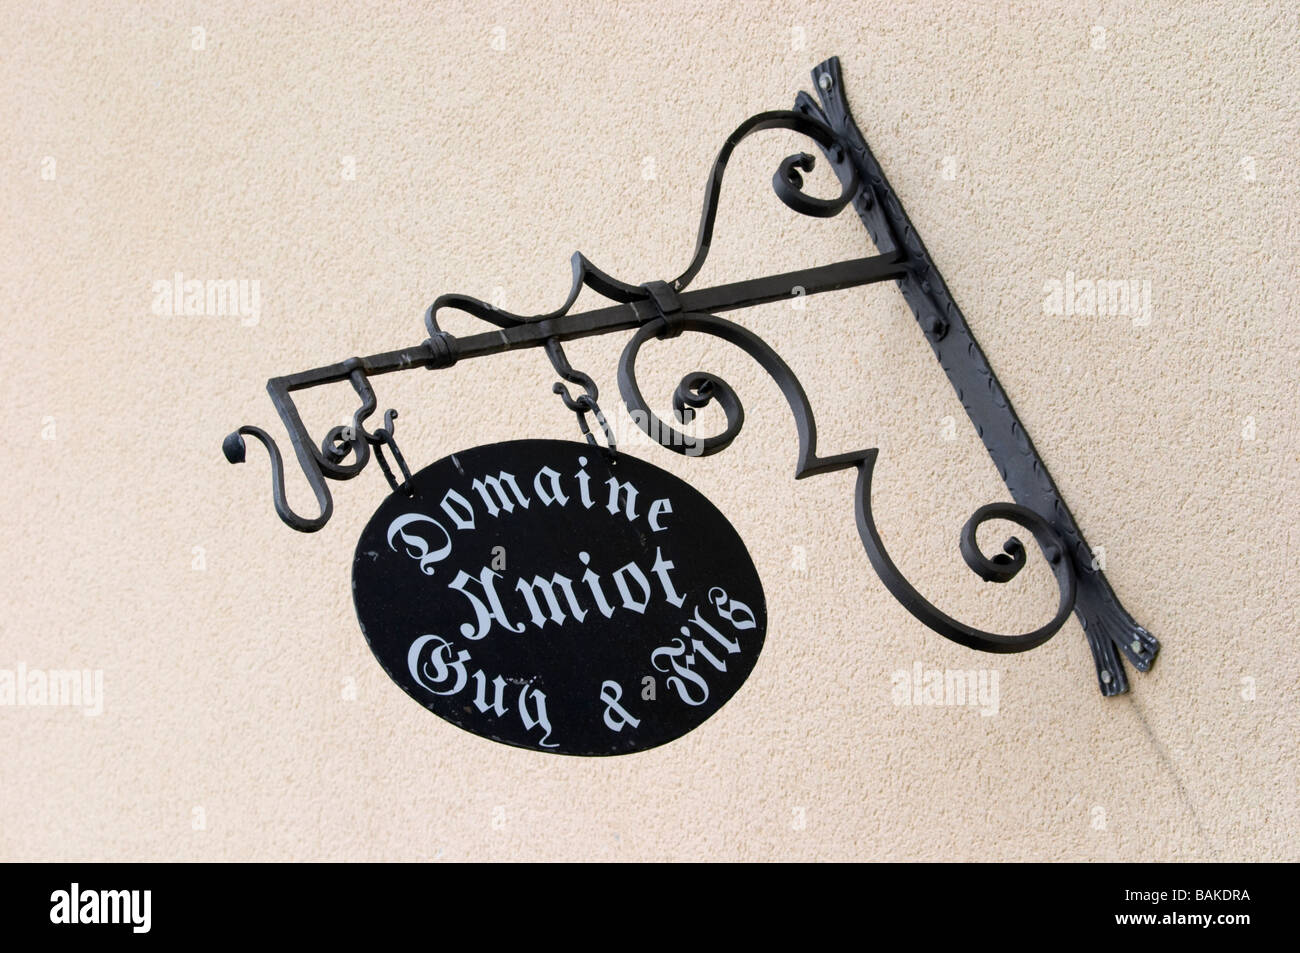 wrought iron sign domaine g amiot & f chassagne-montrachet cote de beaune burgundy france Stock Photo